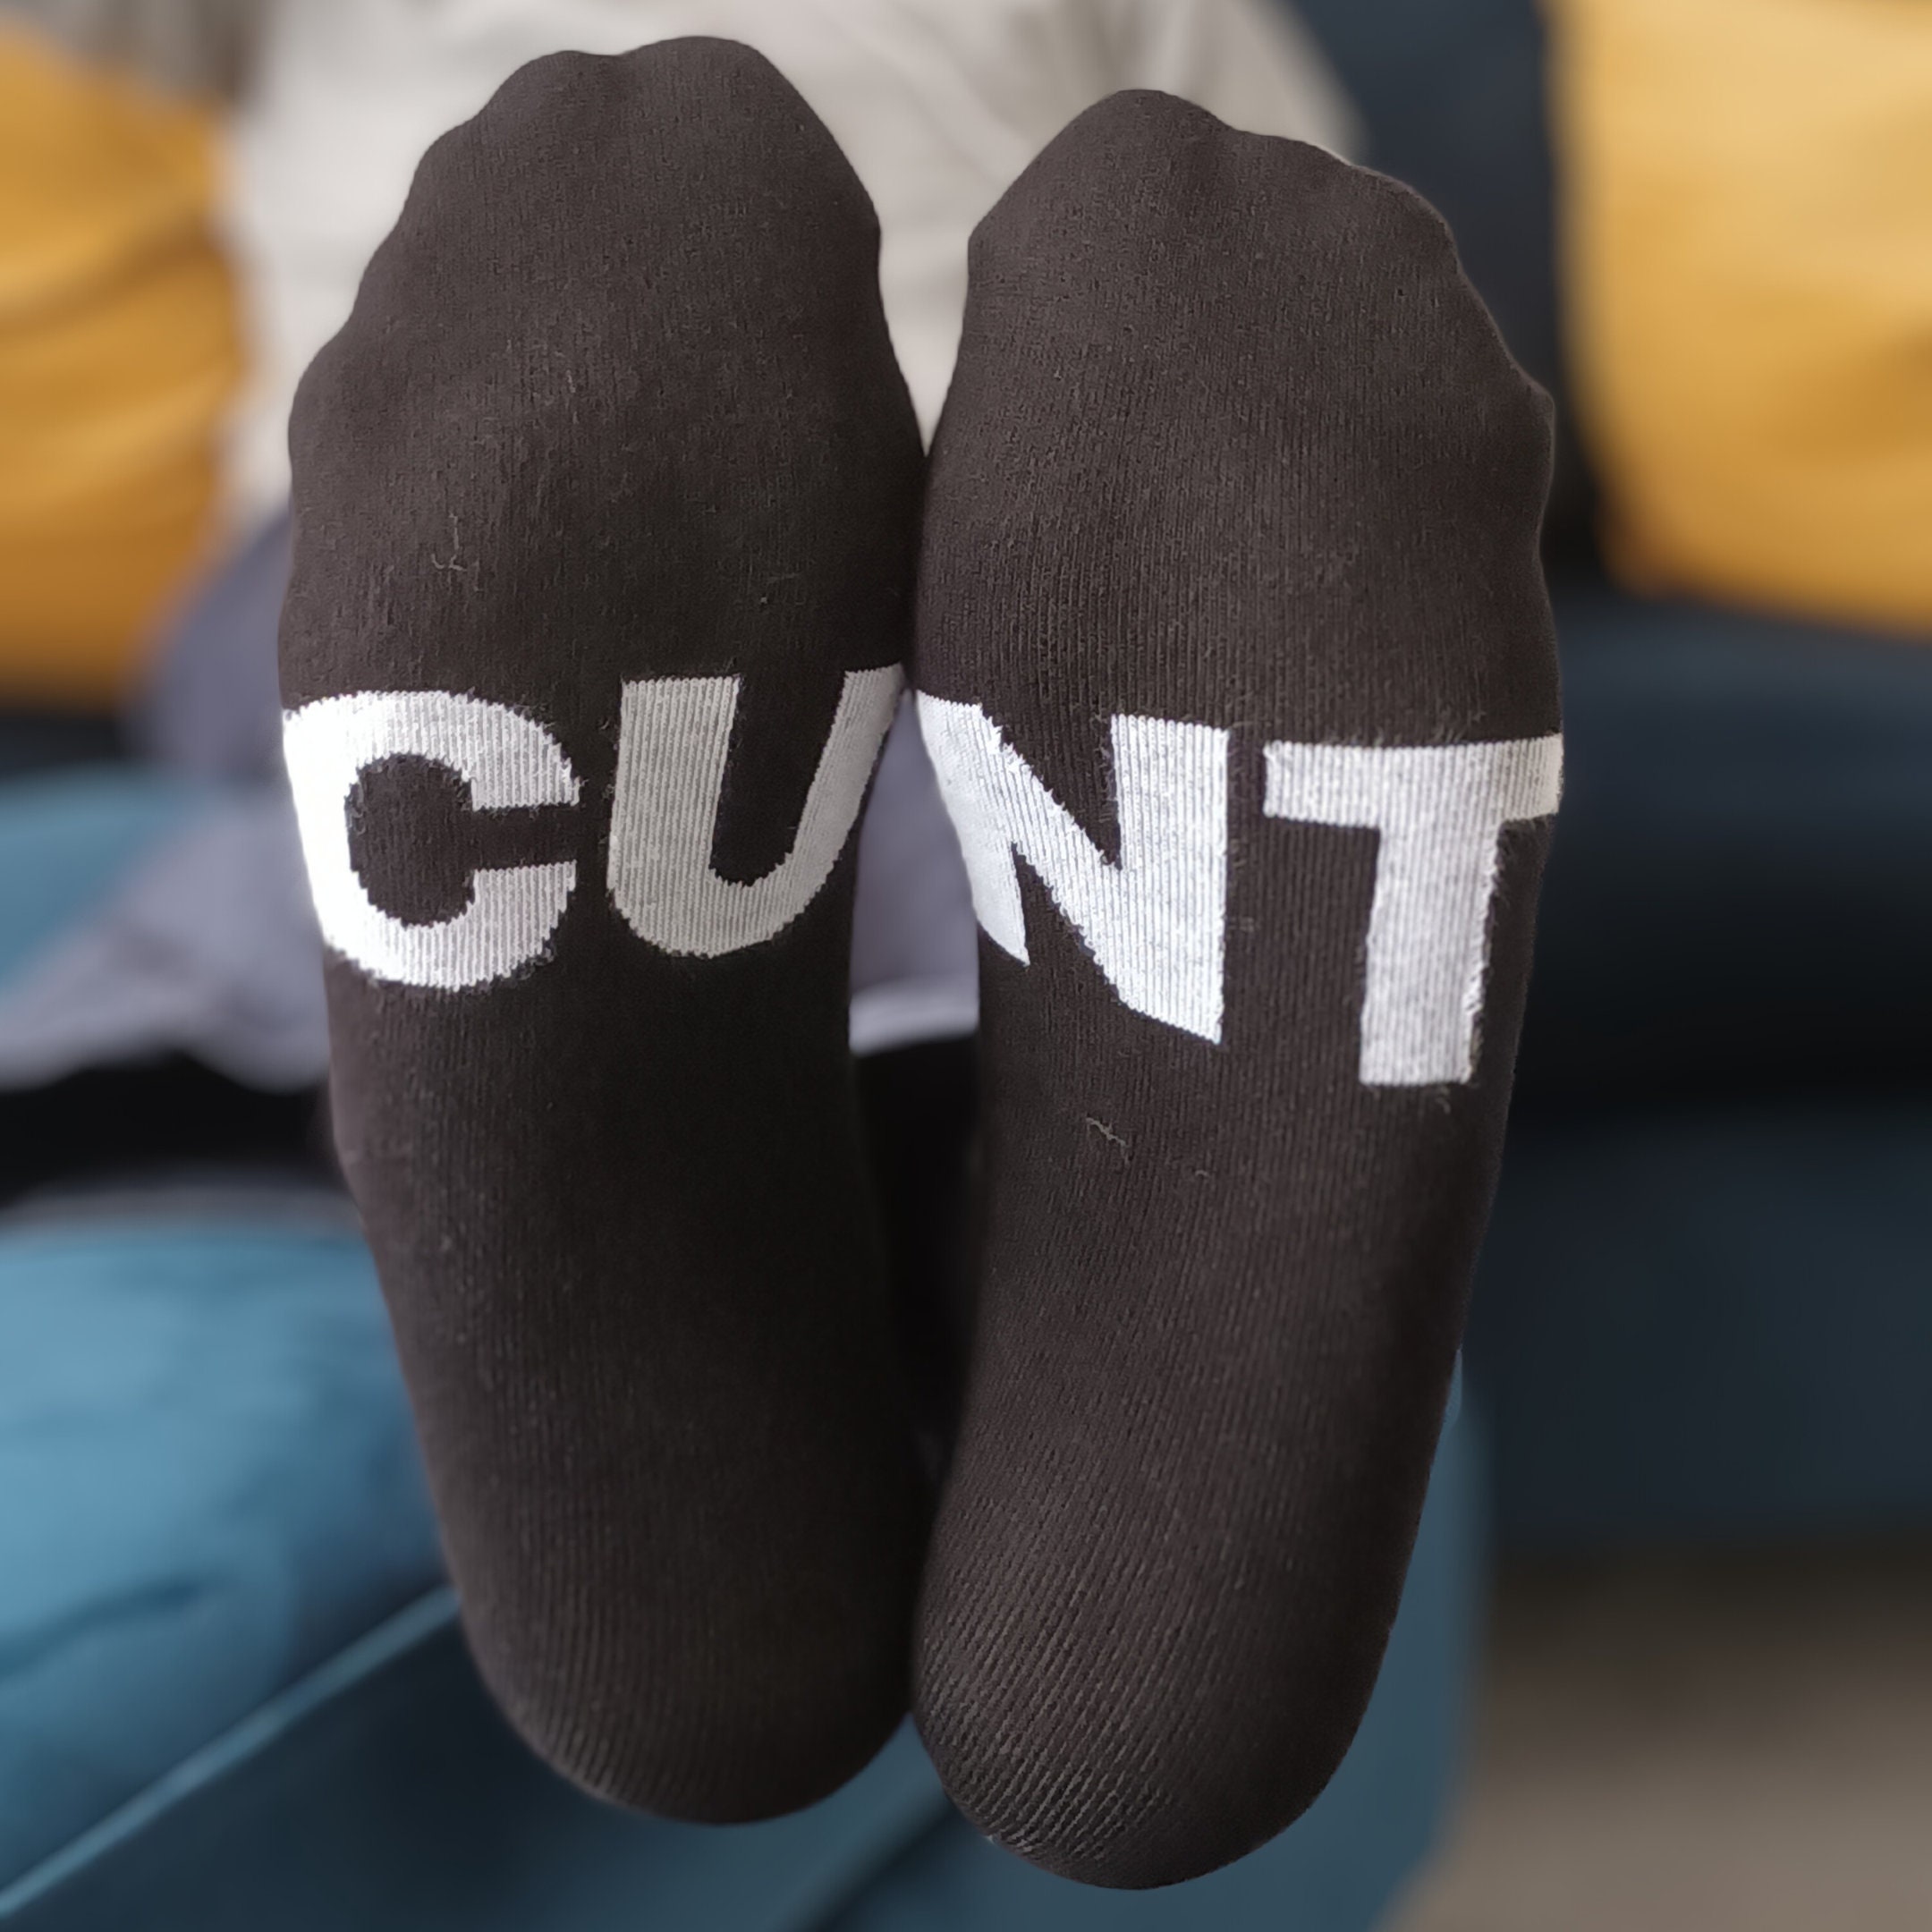 Cunt Funny Socks, Funny Gift for Husband, Rude Gifts, Funny Christmas Gift,  Novelty Socks, Profanity, Offensiv, Stocking Filler, Naughty - Etsy